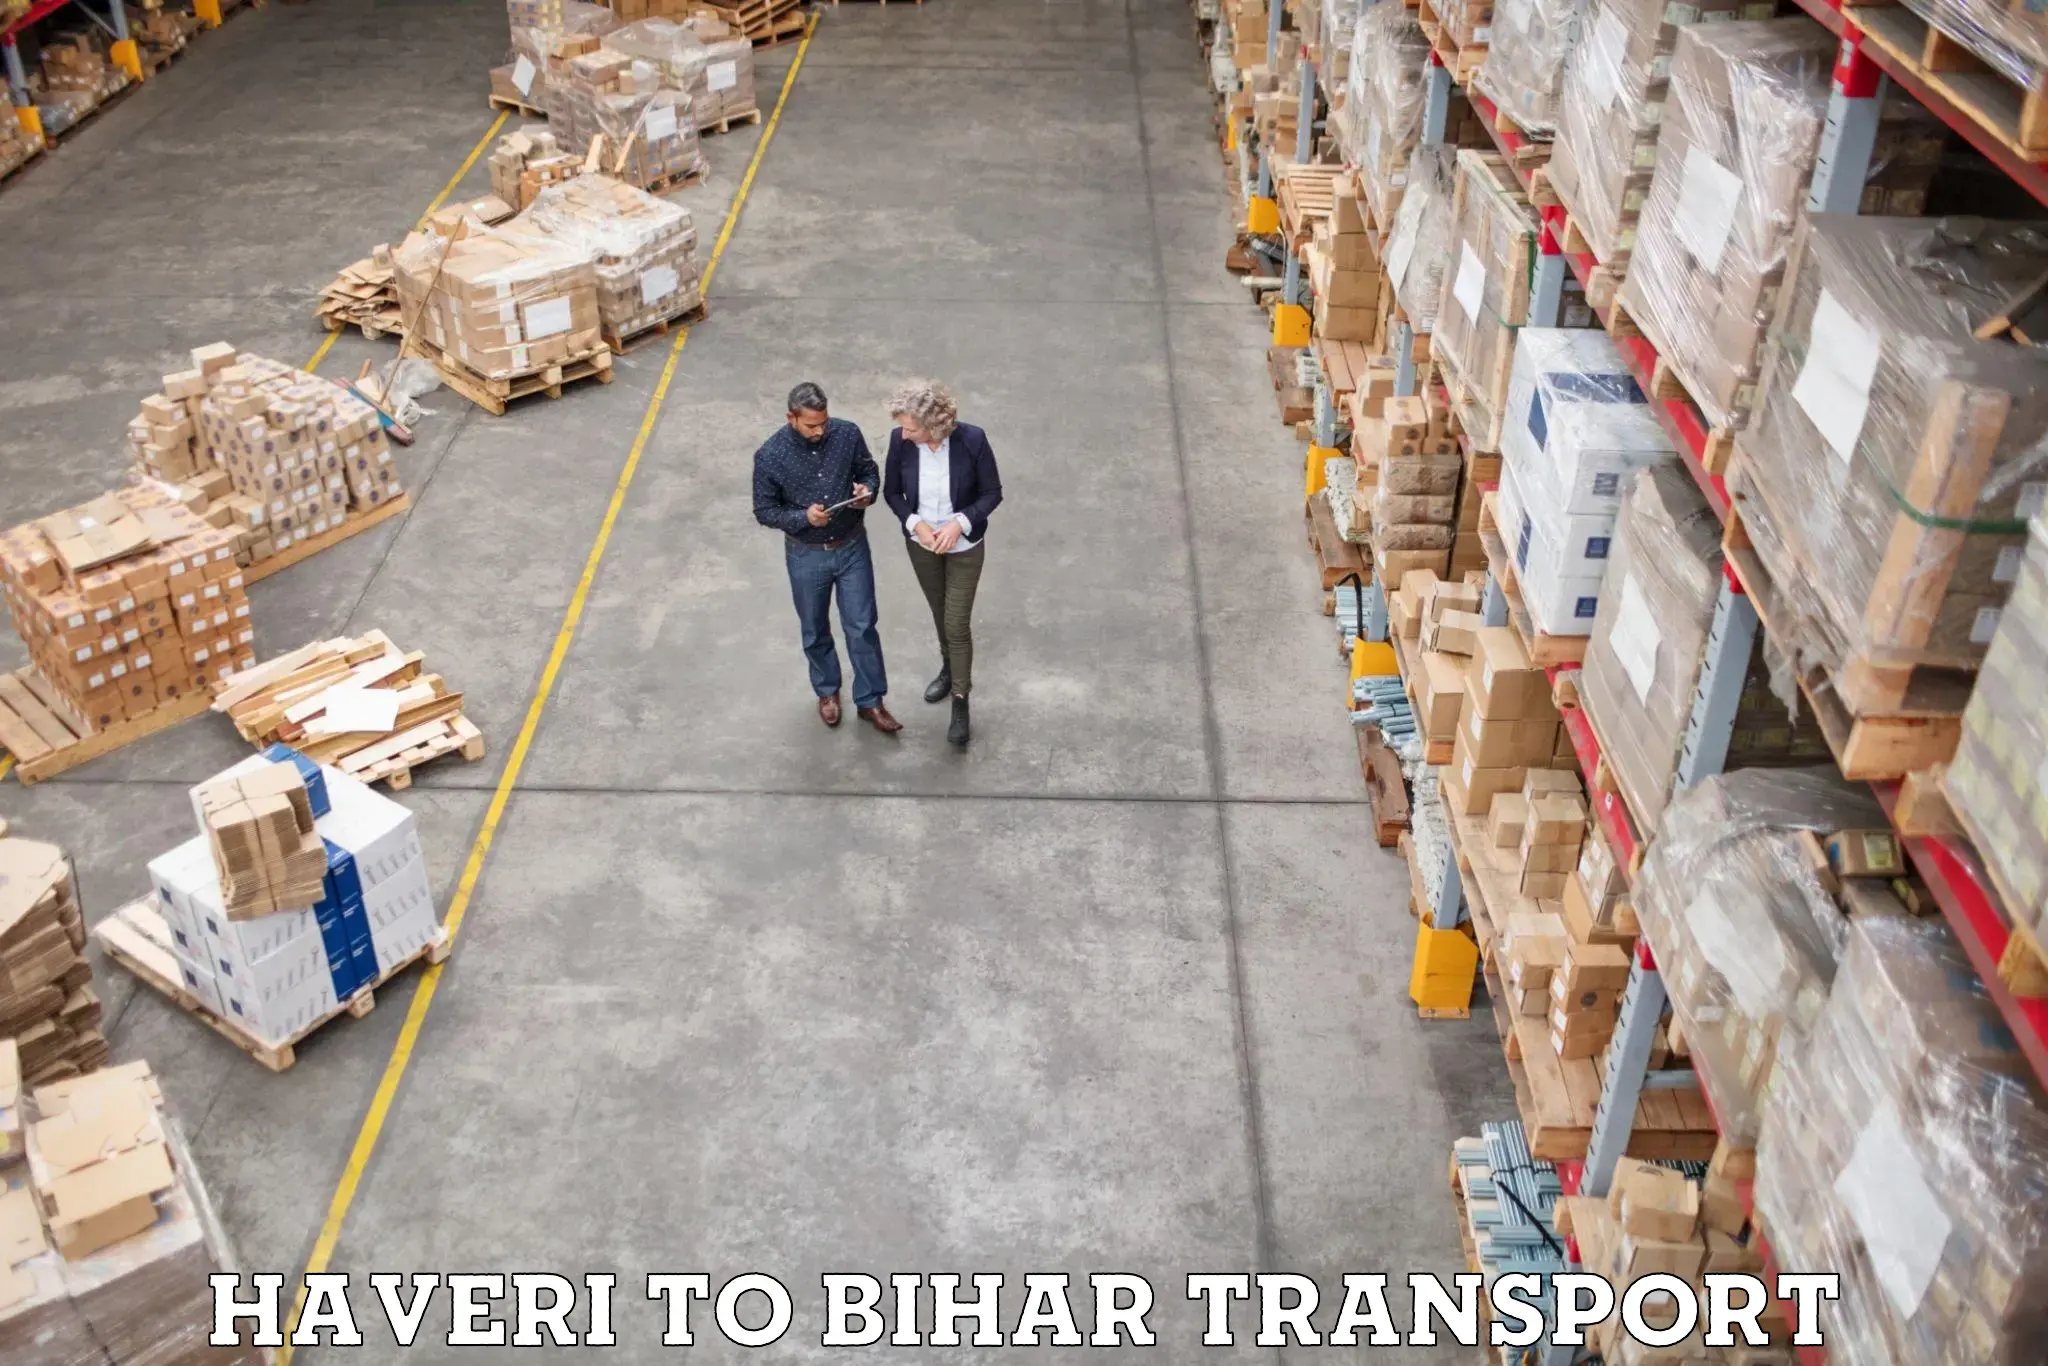 Daily transport service Haveri to Bihar